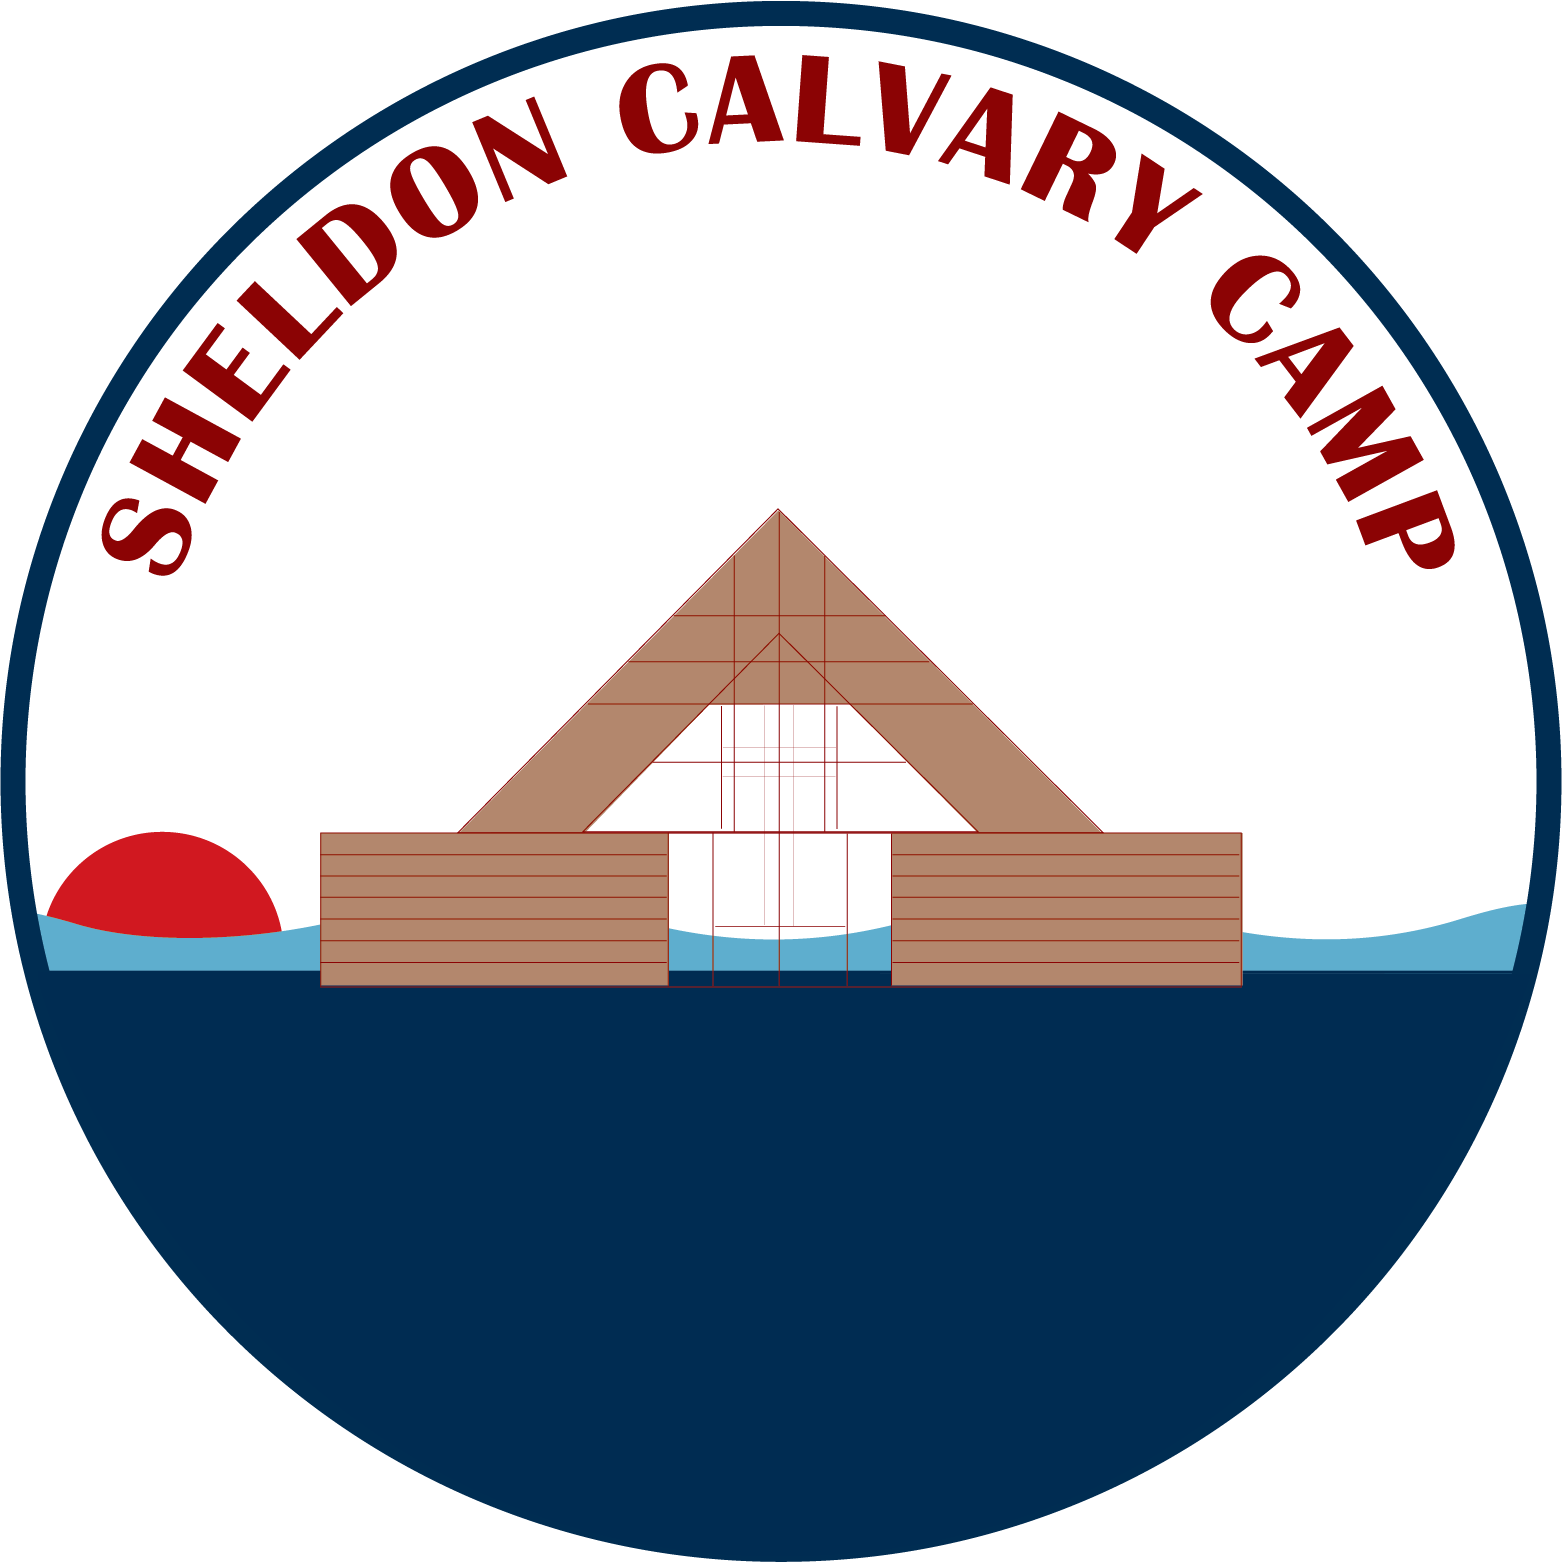 Sheldon Calvary Camp logo